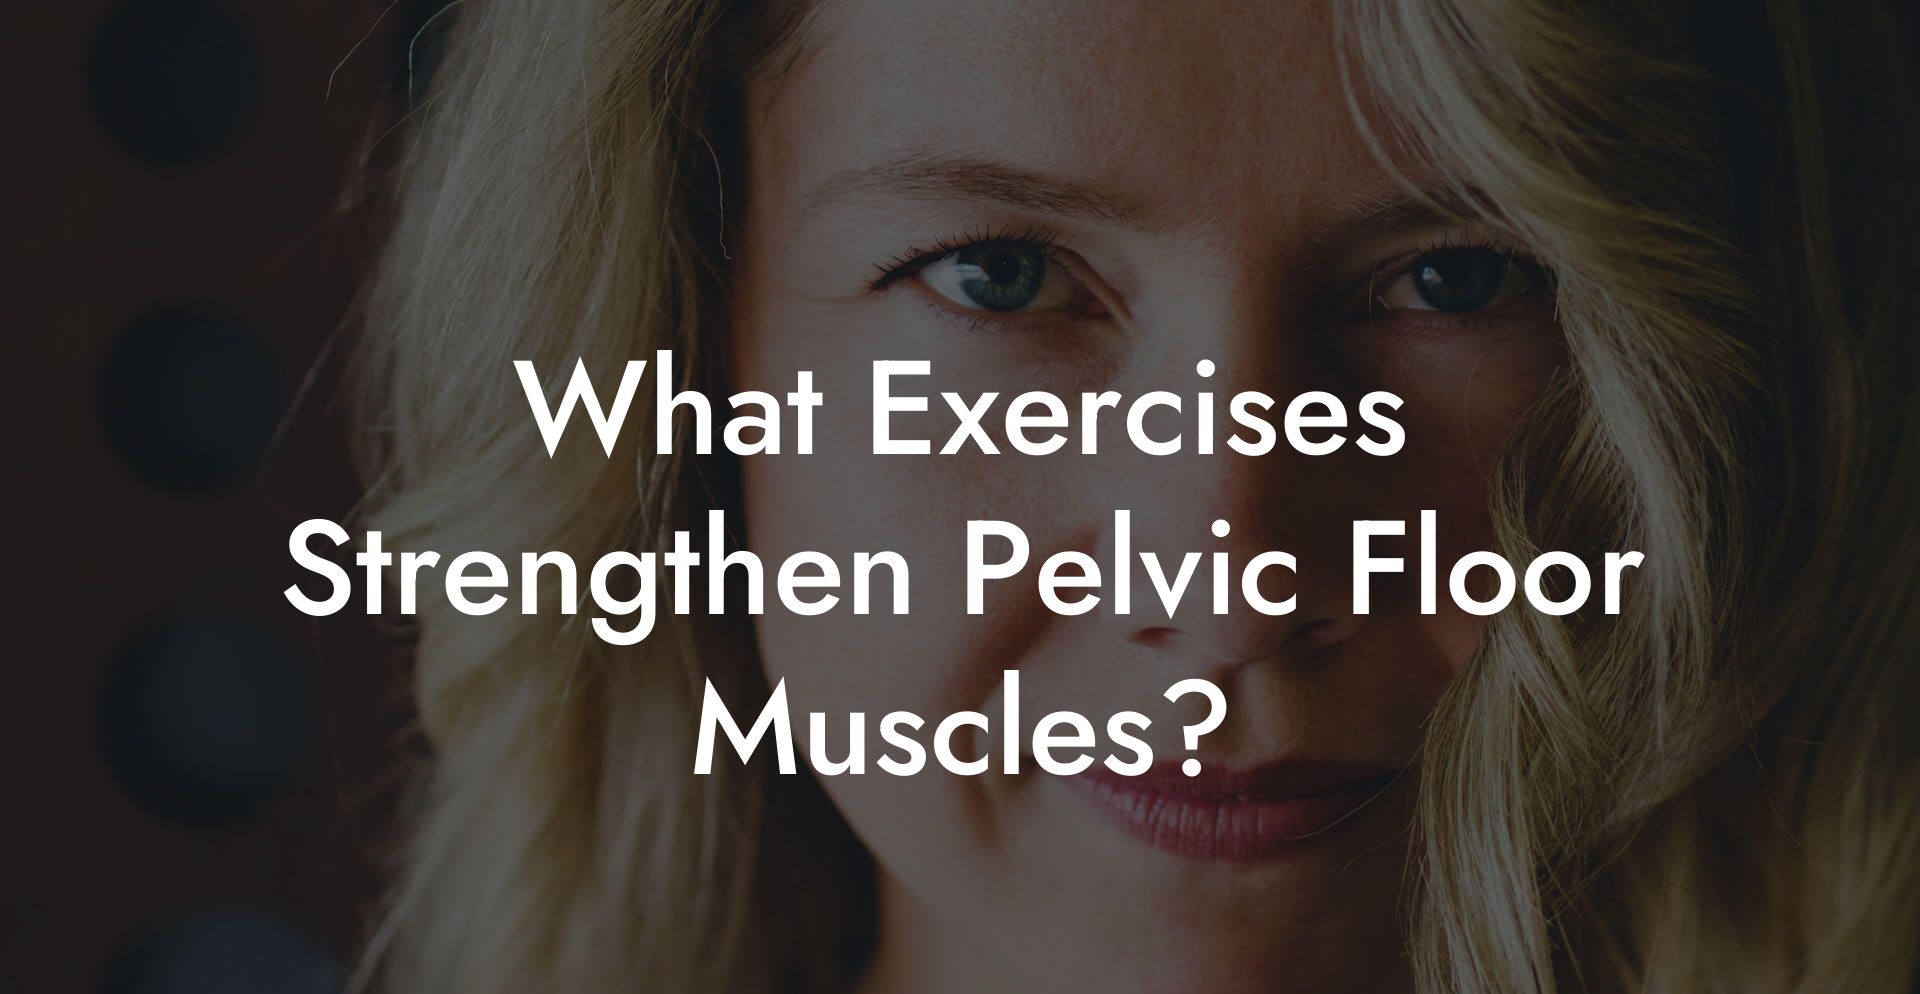 What Exercises Strengthen Pelvic Floor Muscles?